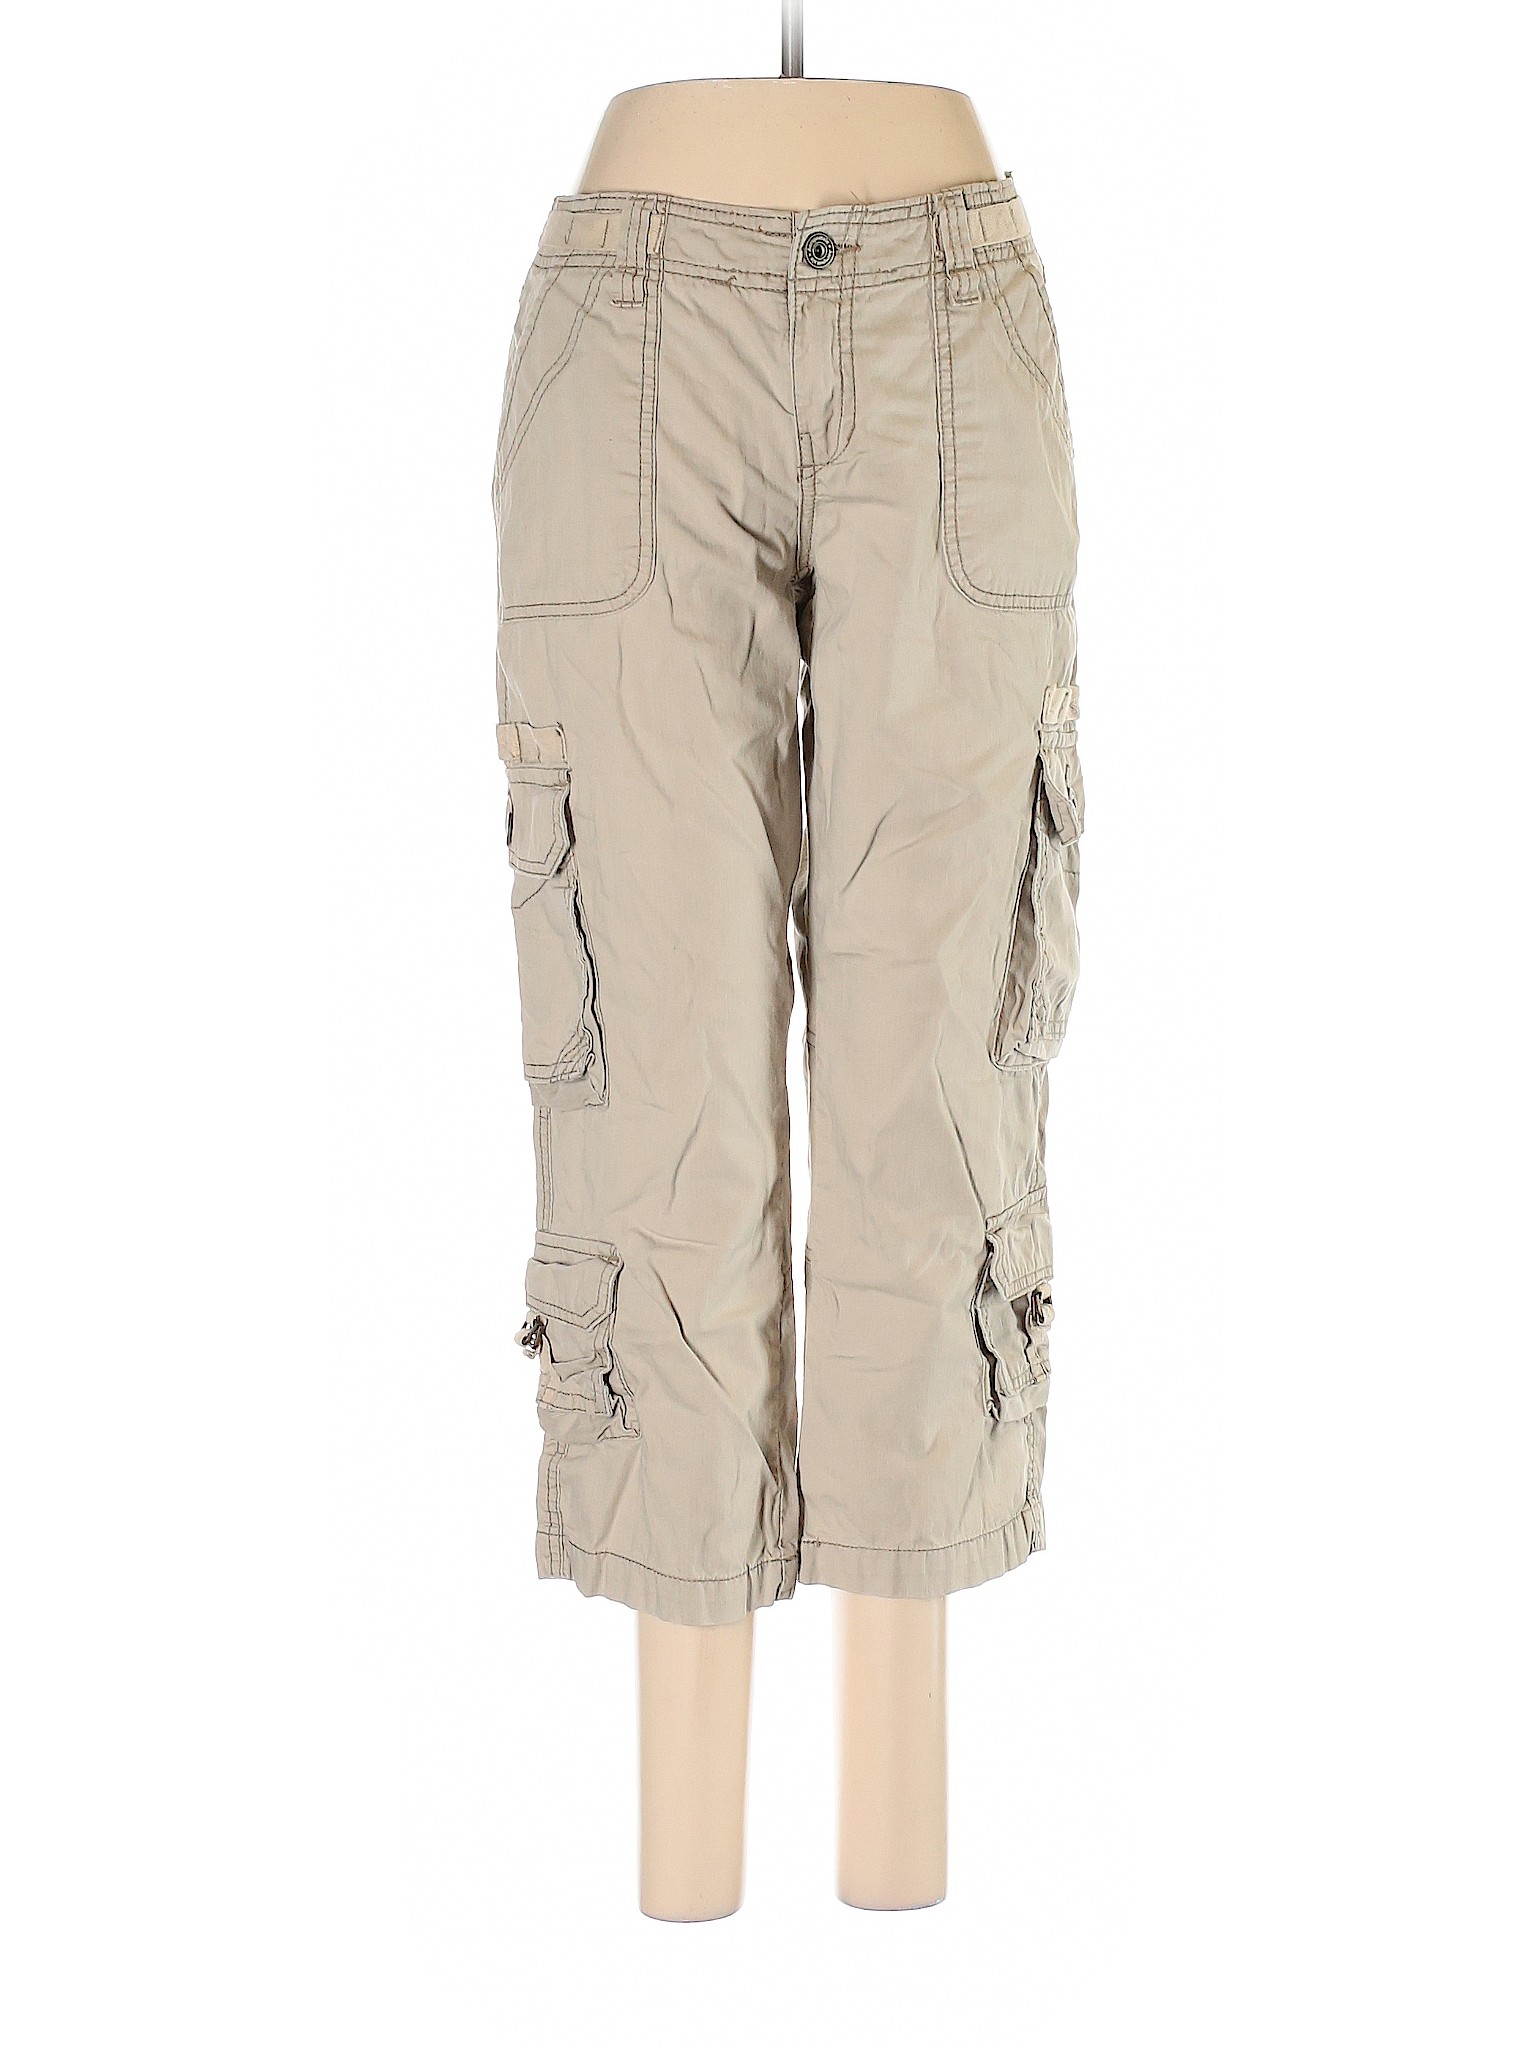 Aeropostale Women Brown Cargo Pants 7 | eBay